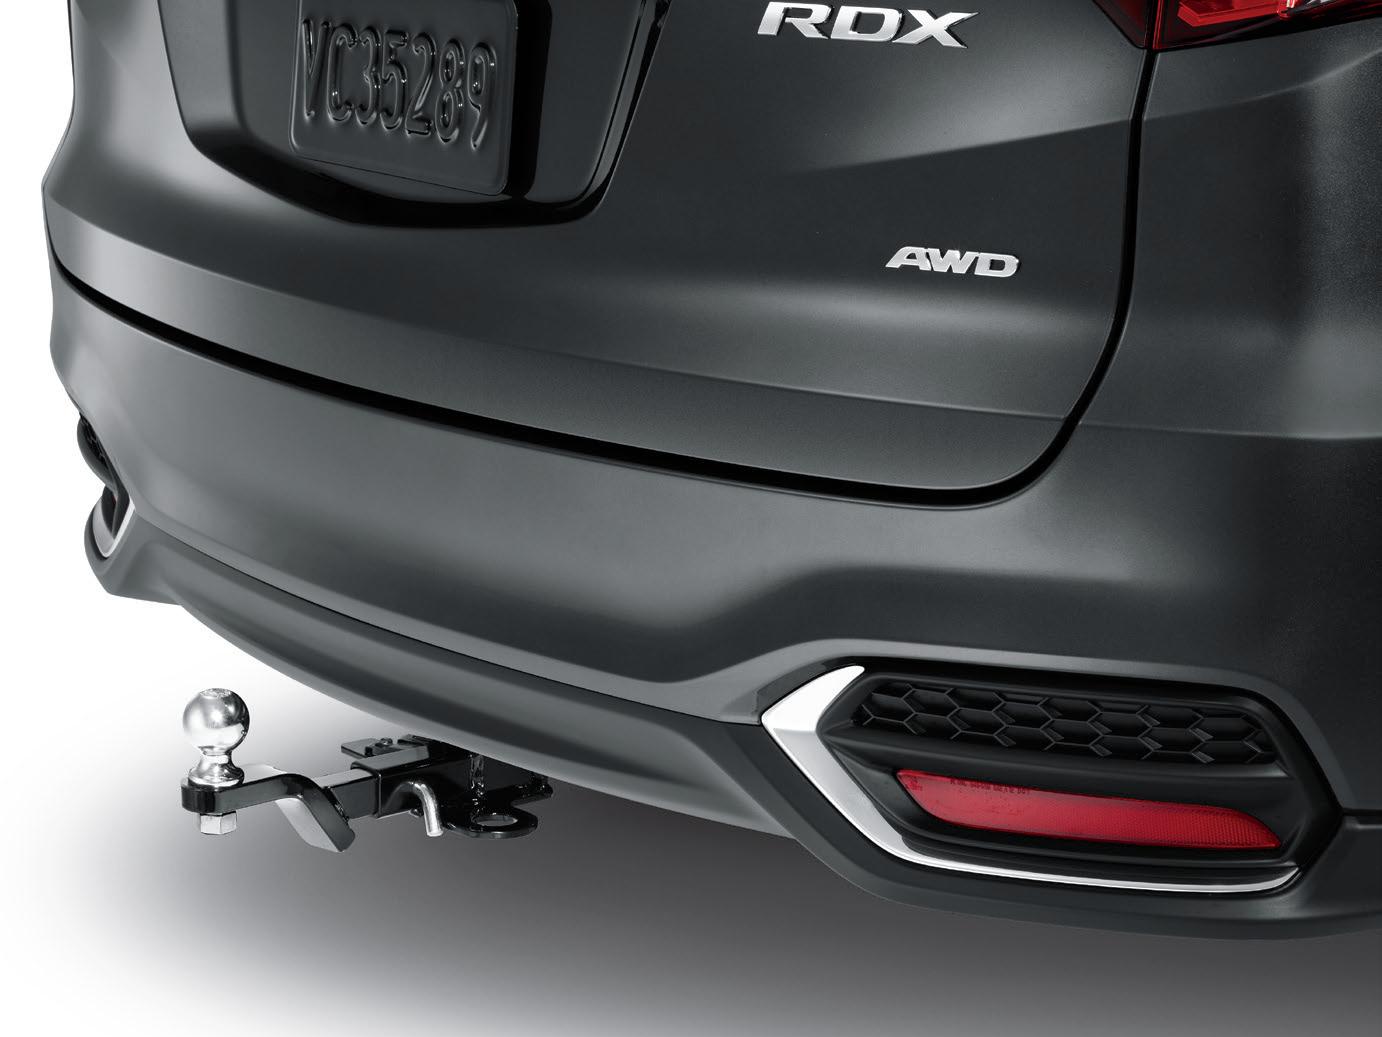 2017 Acura RDX Trailer Hitch 08L92-TX4-200